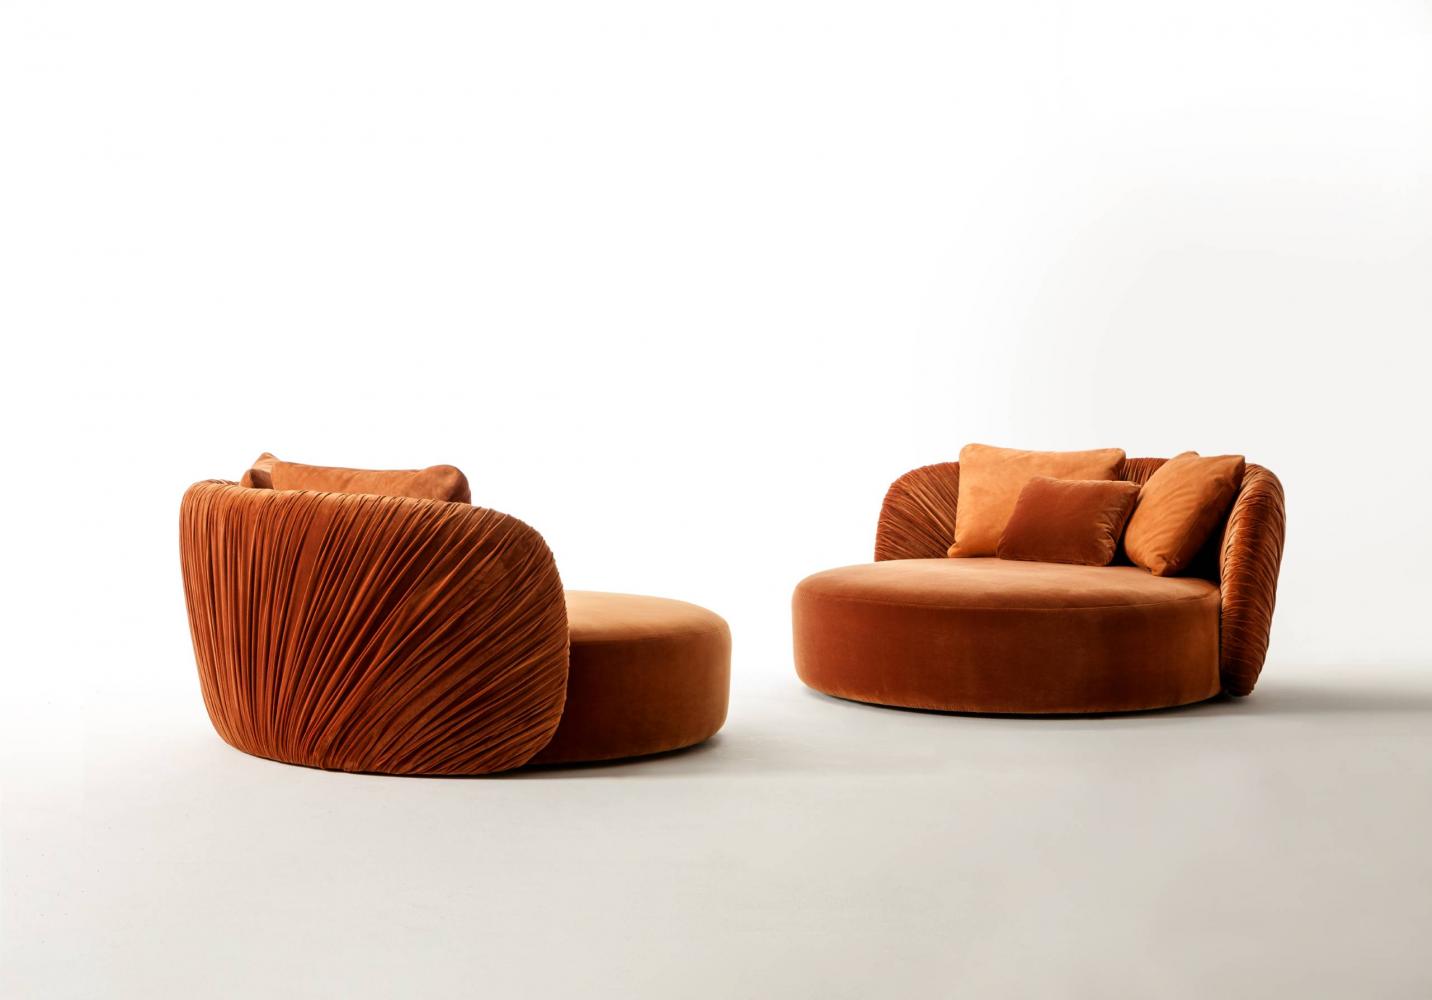 Drapè Round leather or velvet luxuxy rounded sofa with handmade pleats design